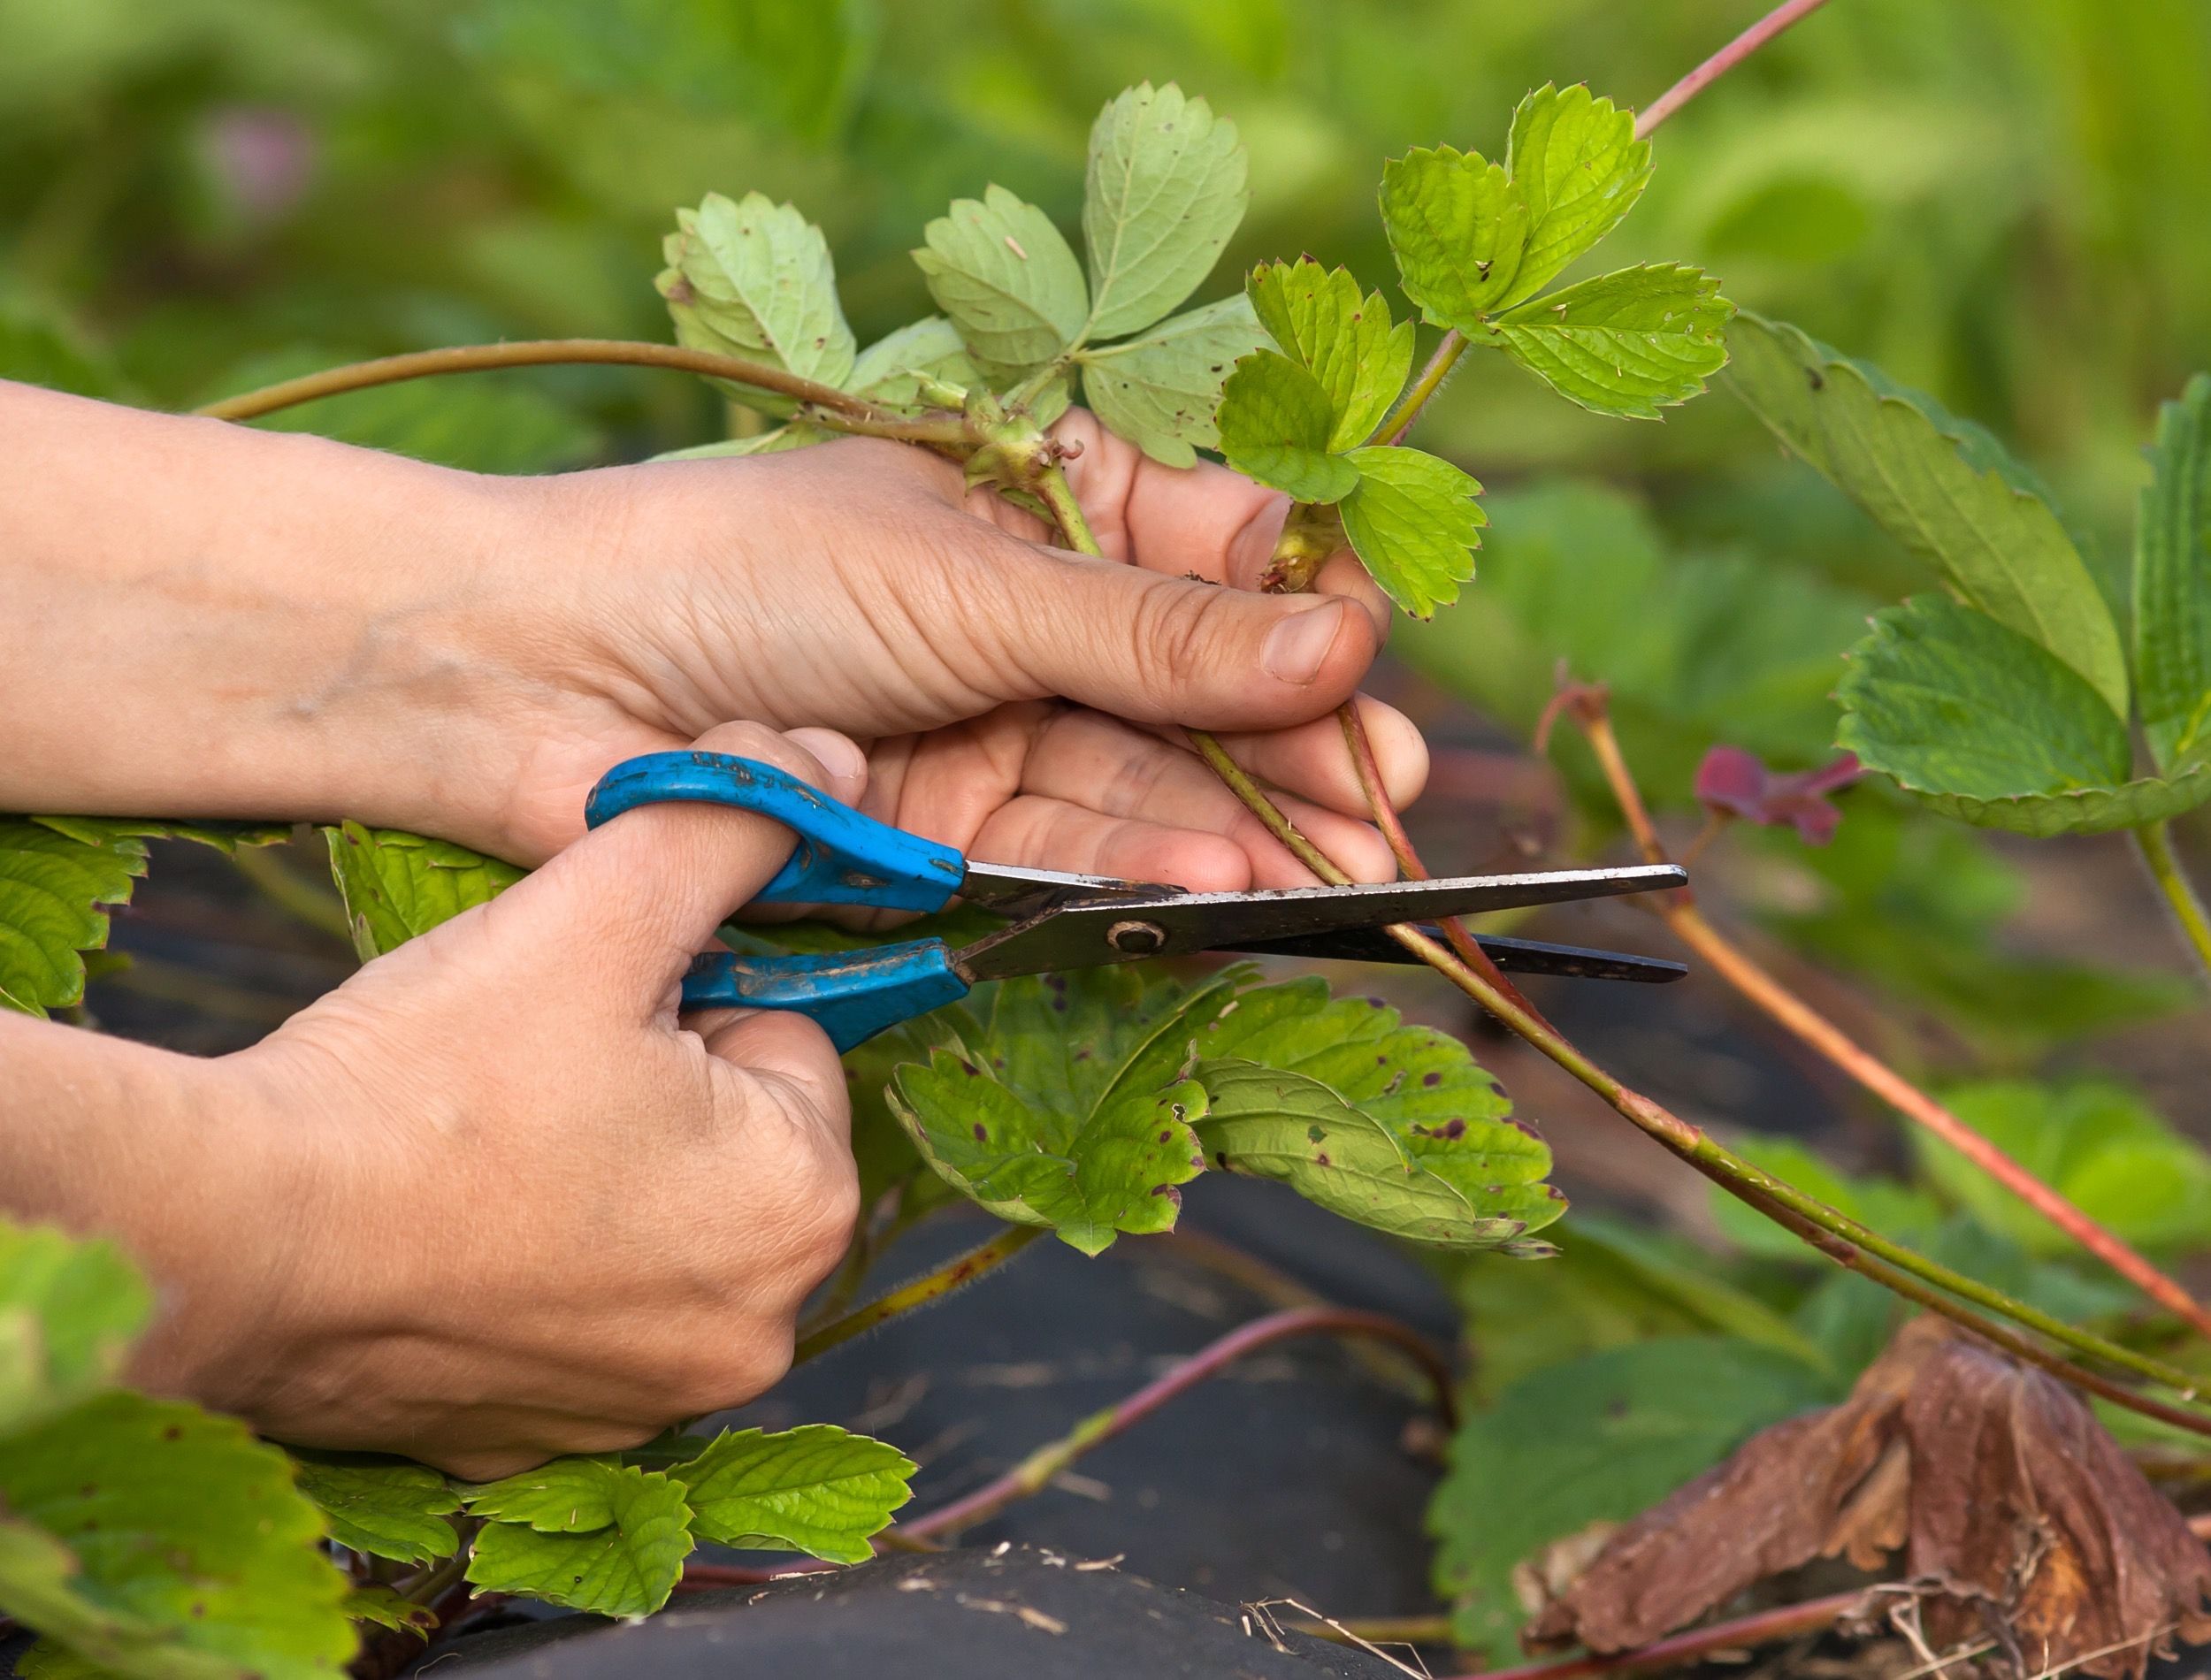 Hands of gardener cutting strawberry